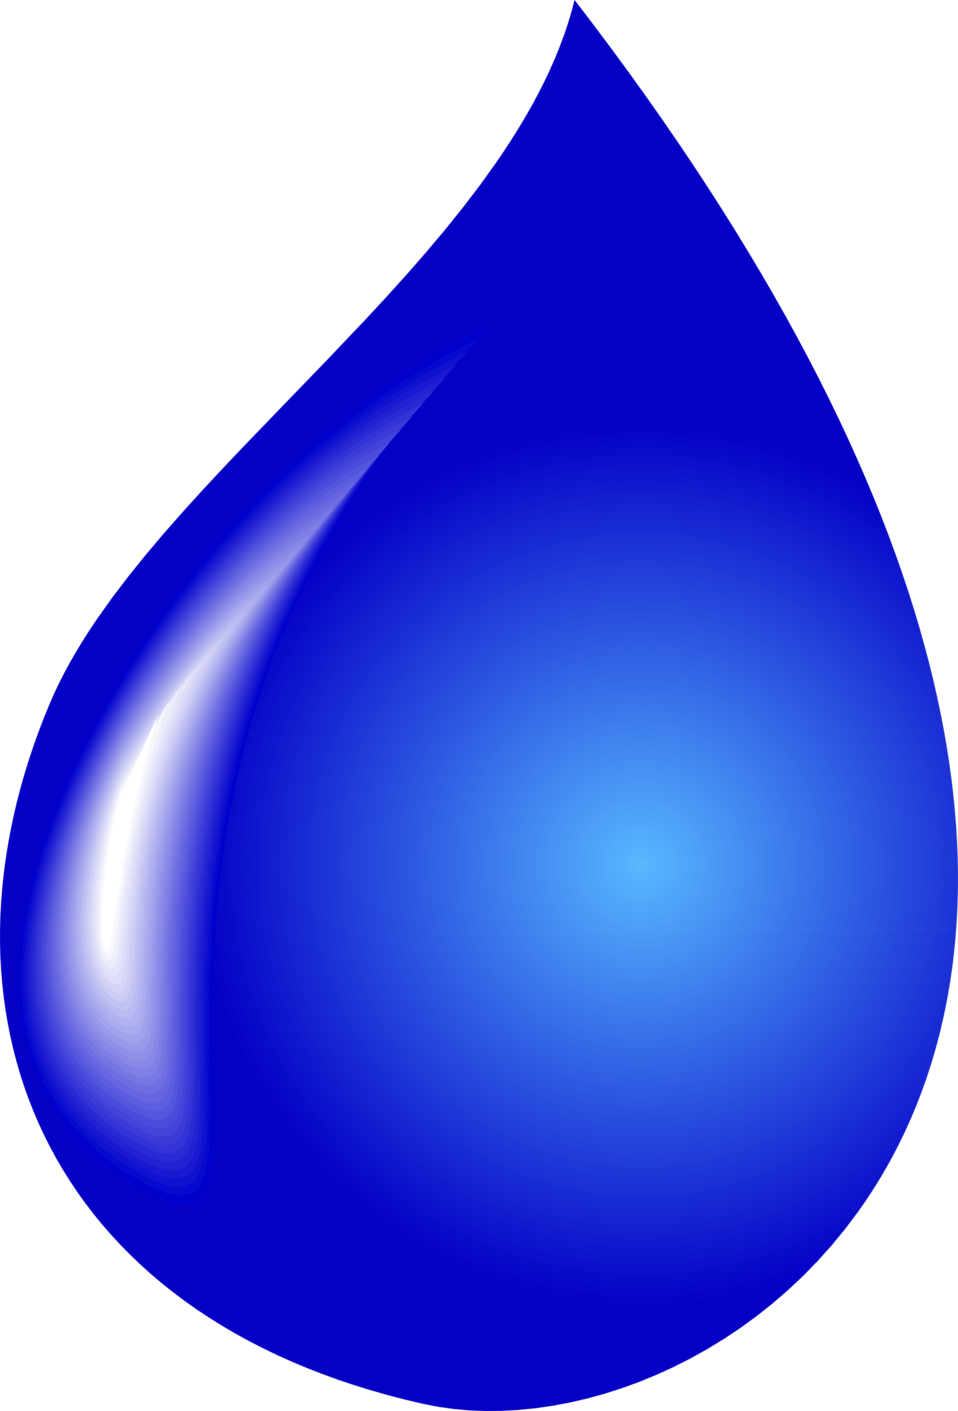 Public domain clip art. Water clipart circle